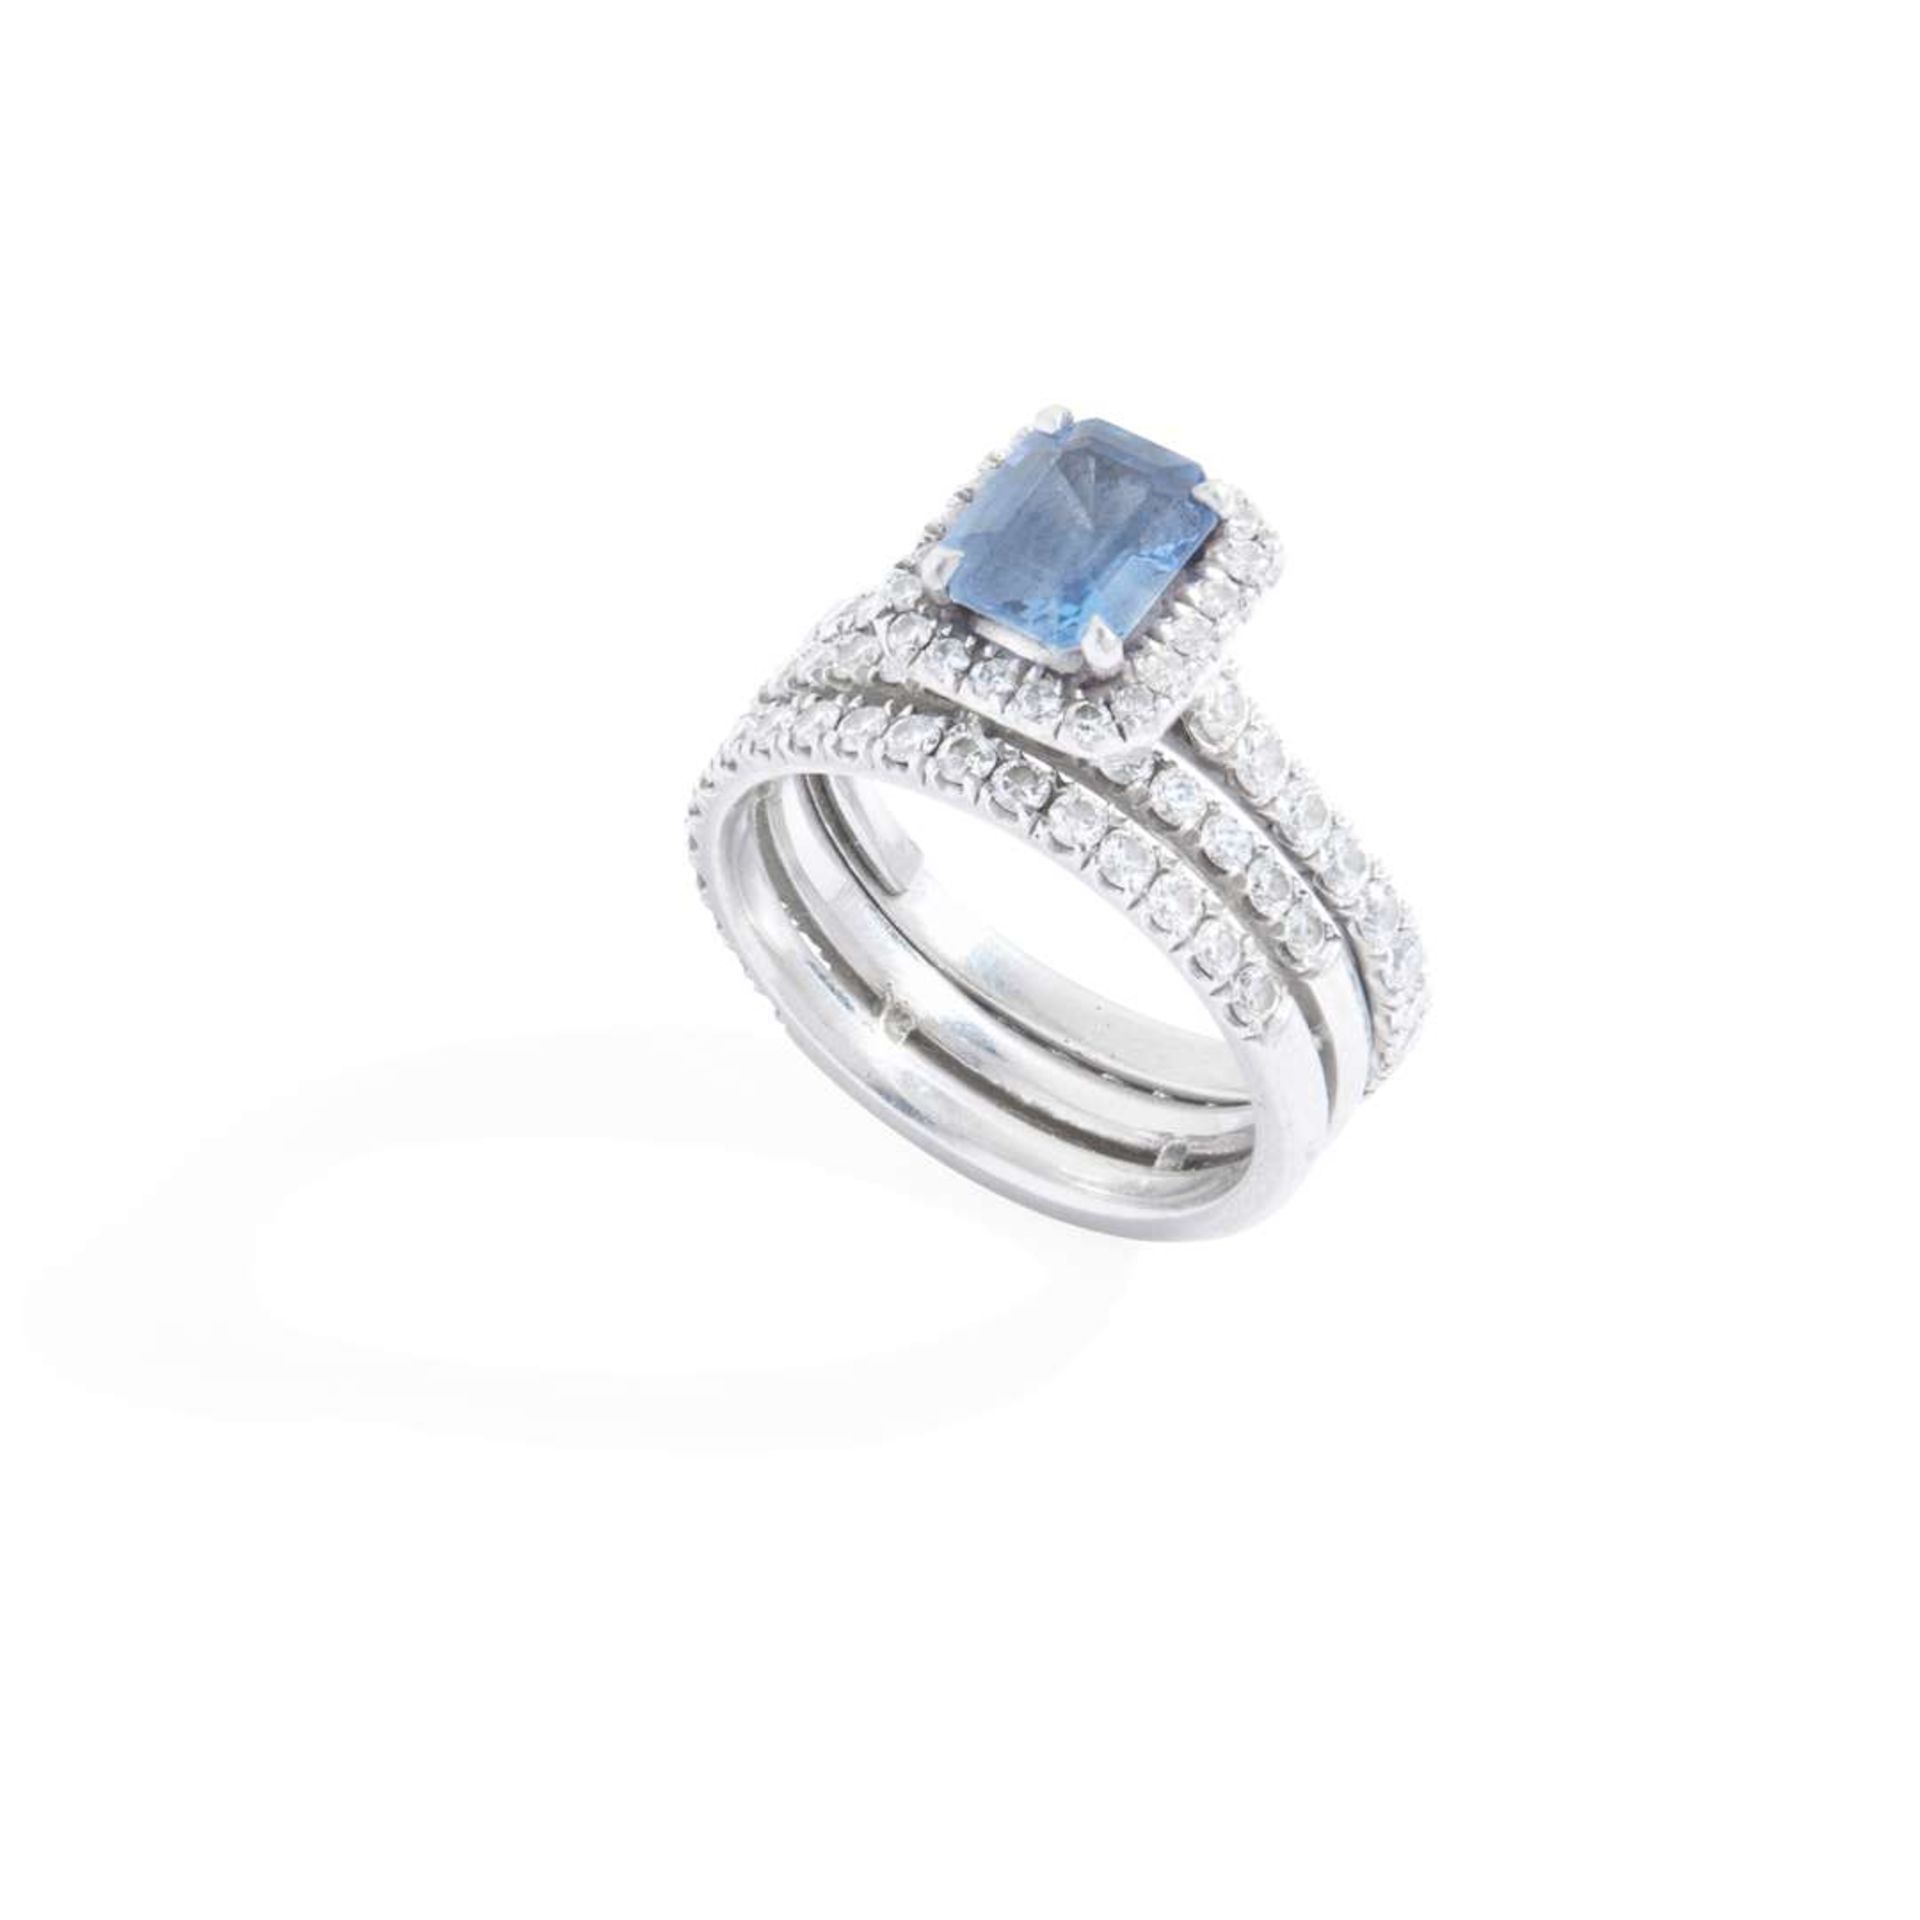 A sapphire and diamond ring set